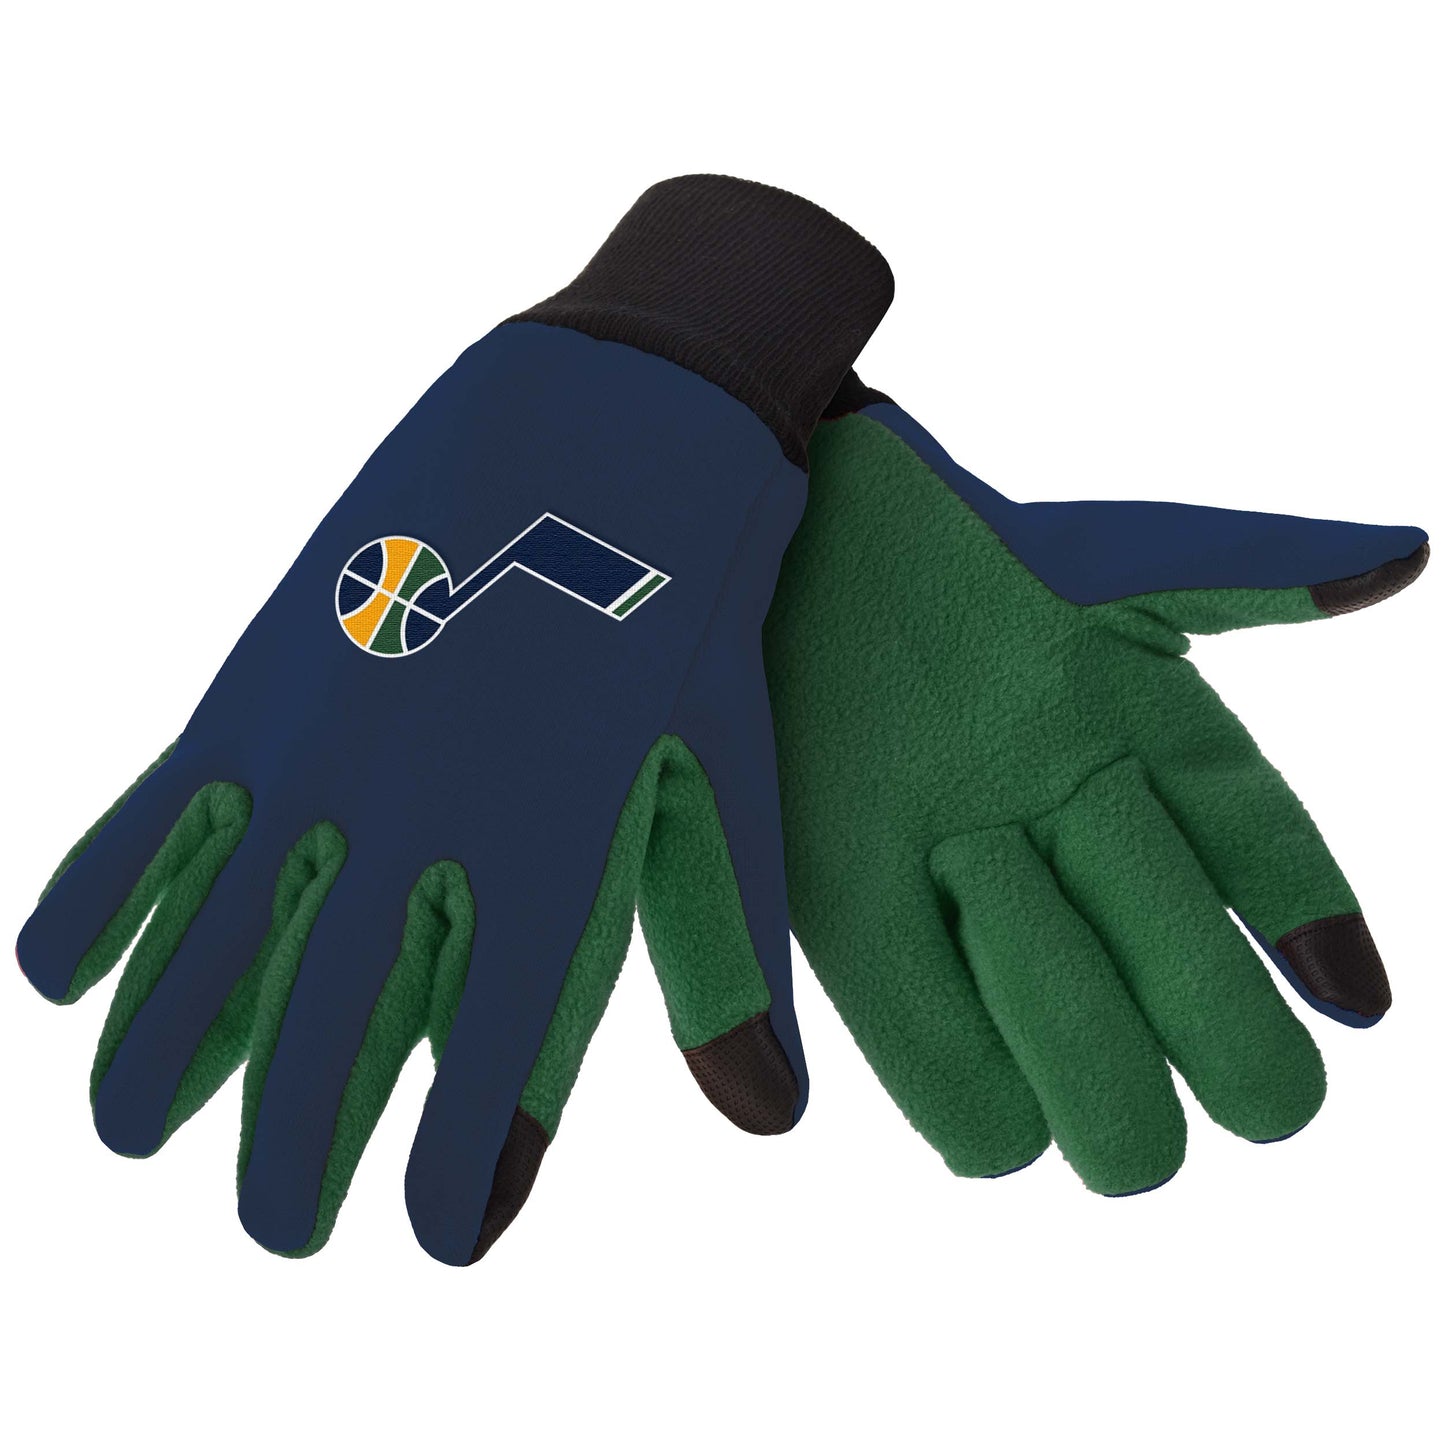 Utah Jazz Color Texting Gloves by FOCO